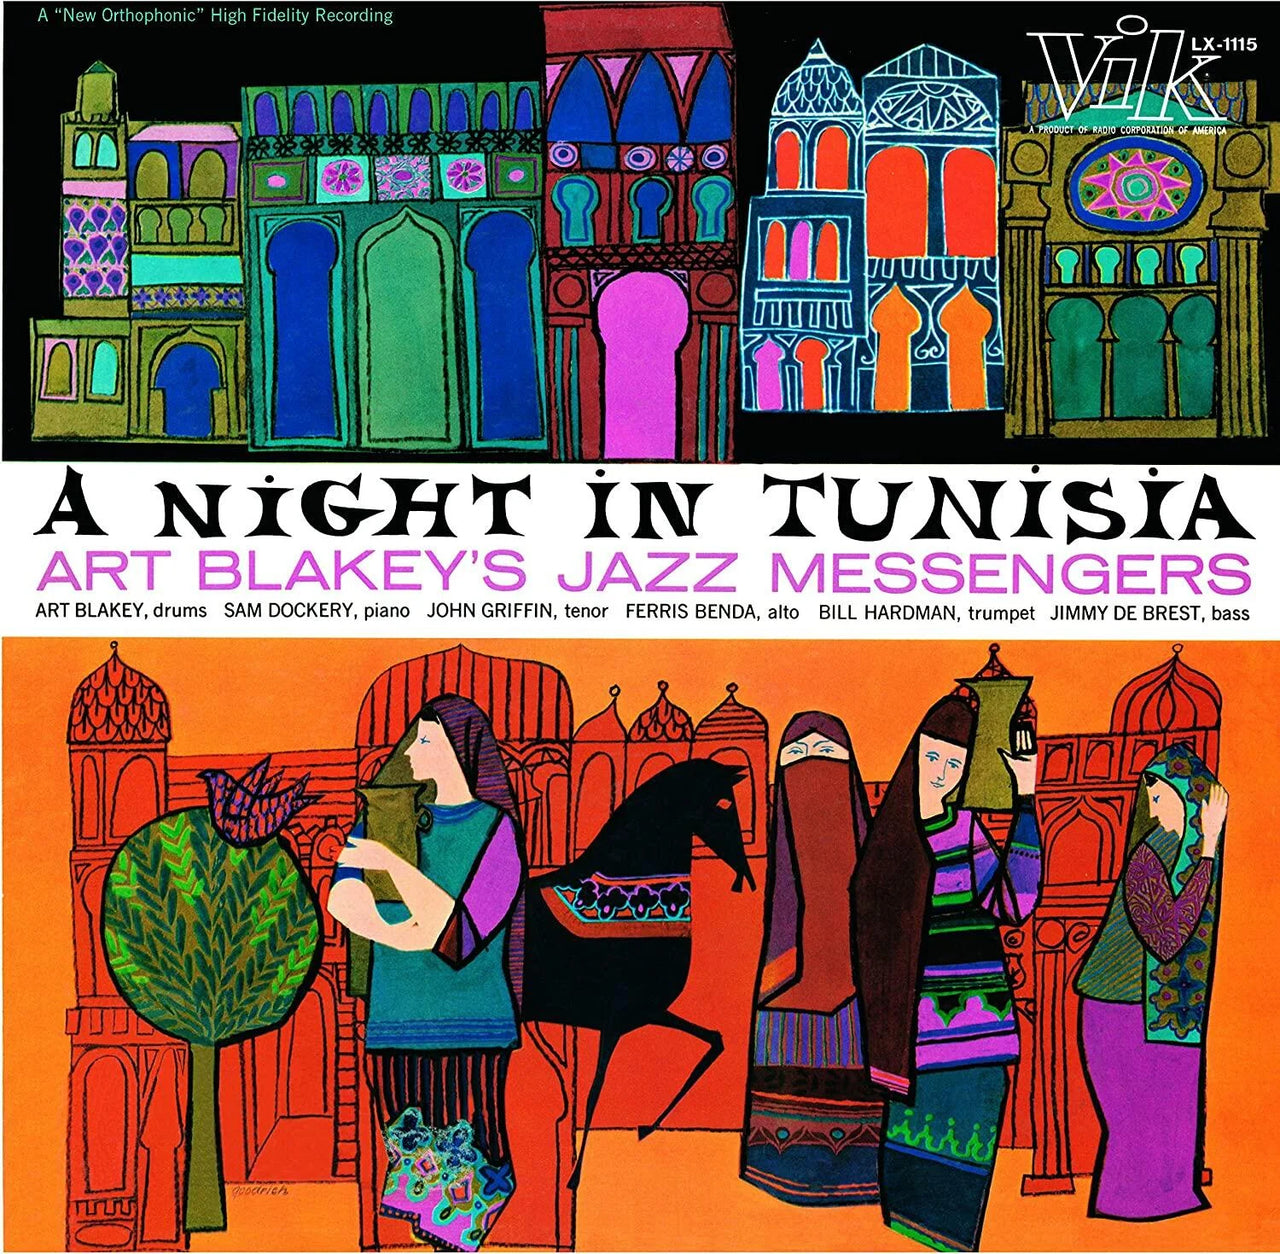 ART BLAKEY - A NIGHT IN TUNISIA (1LP)